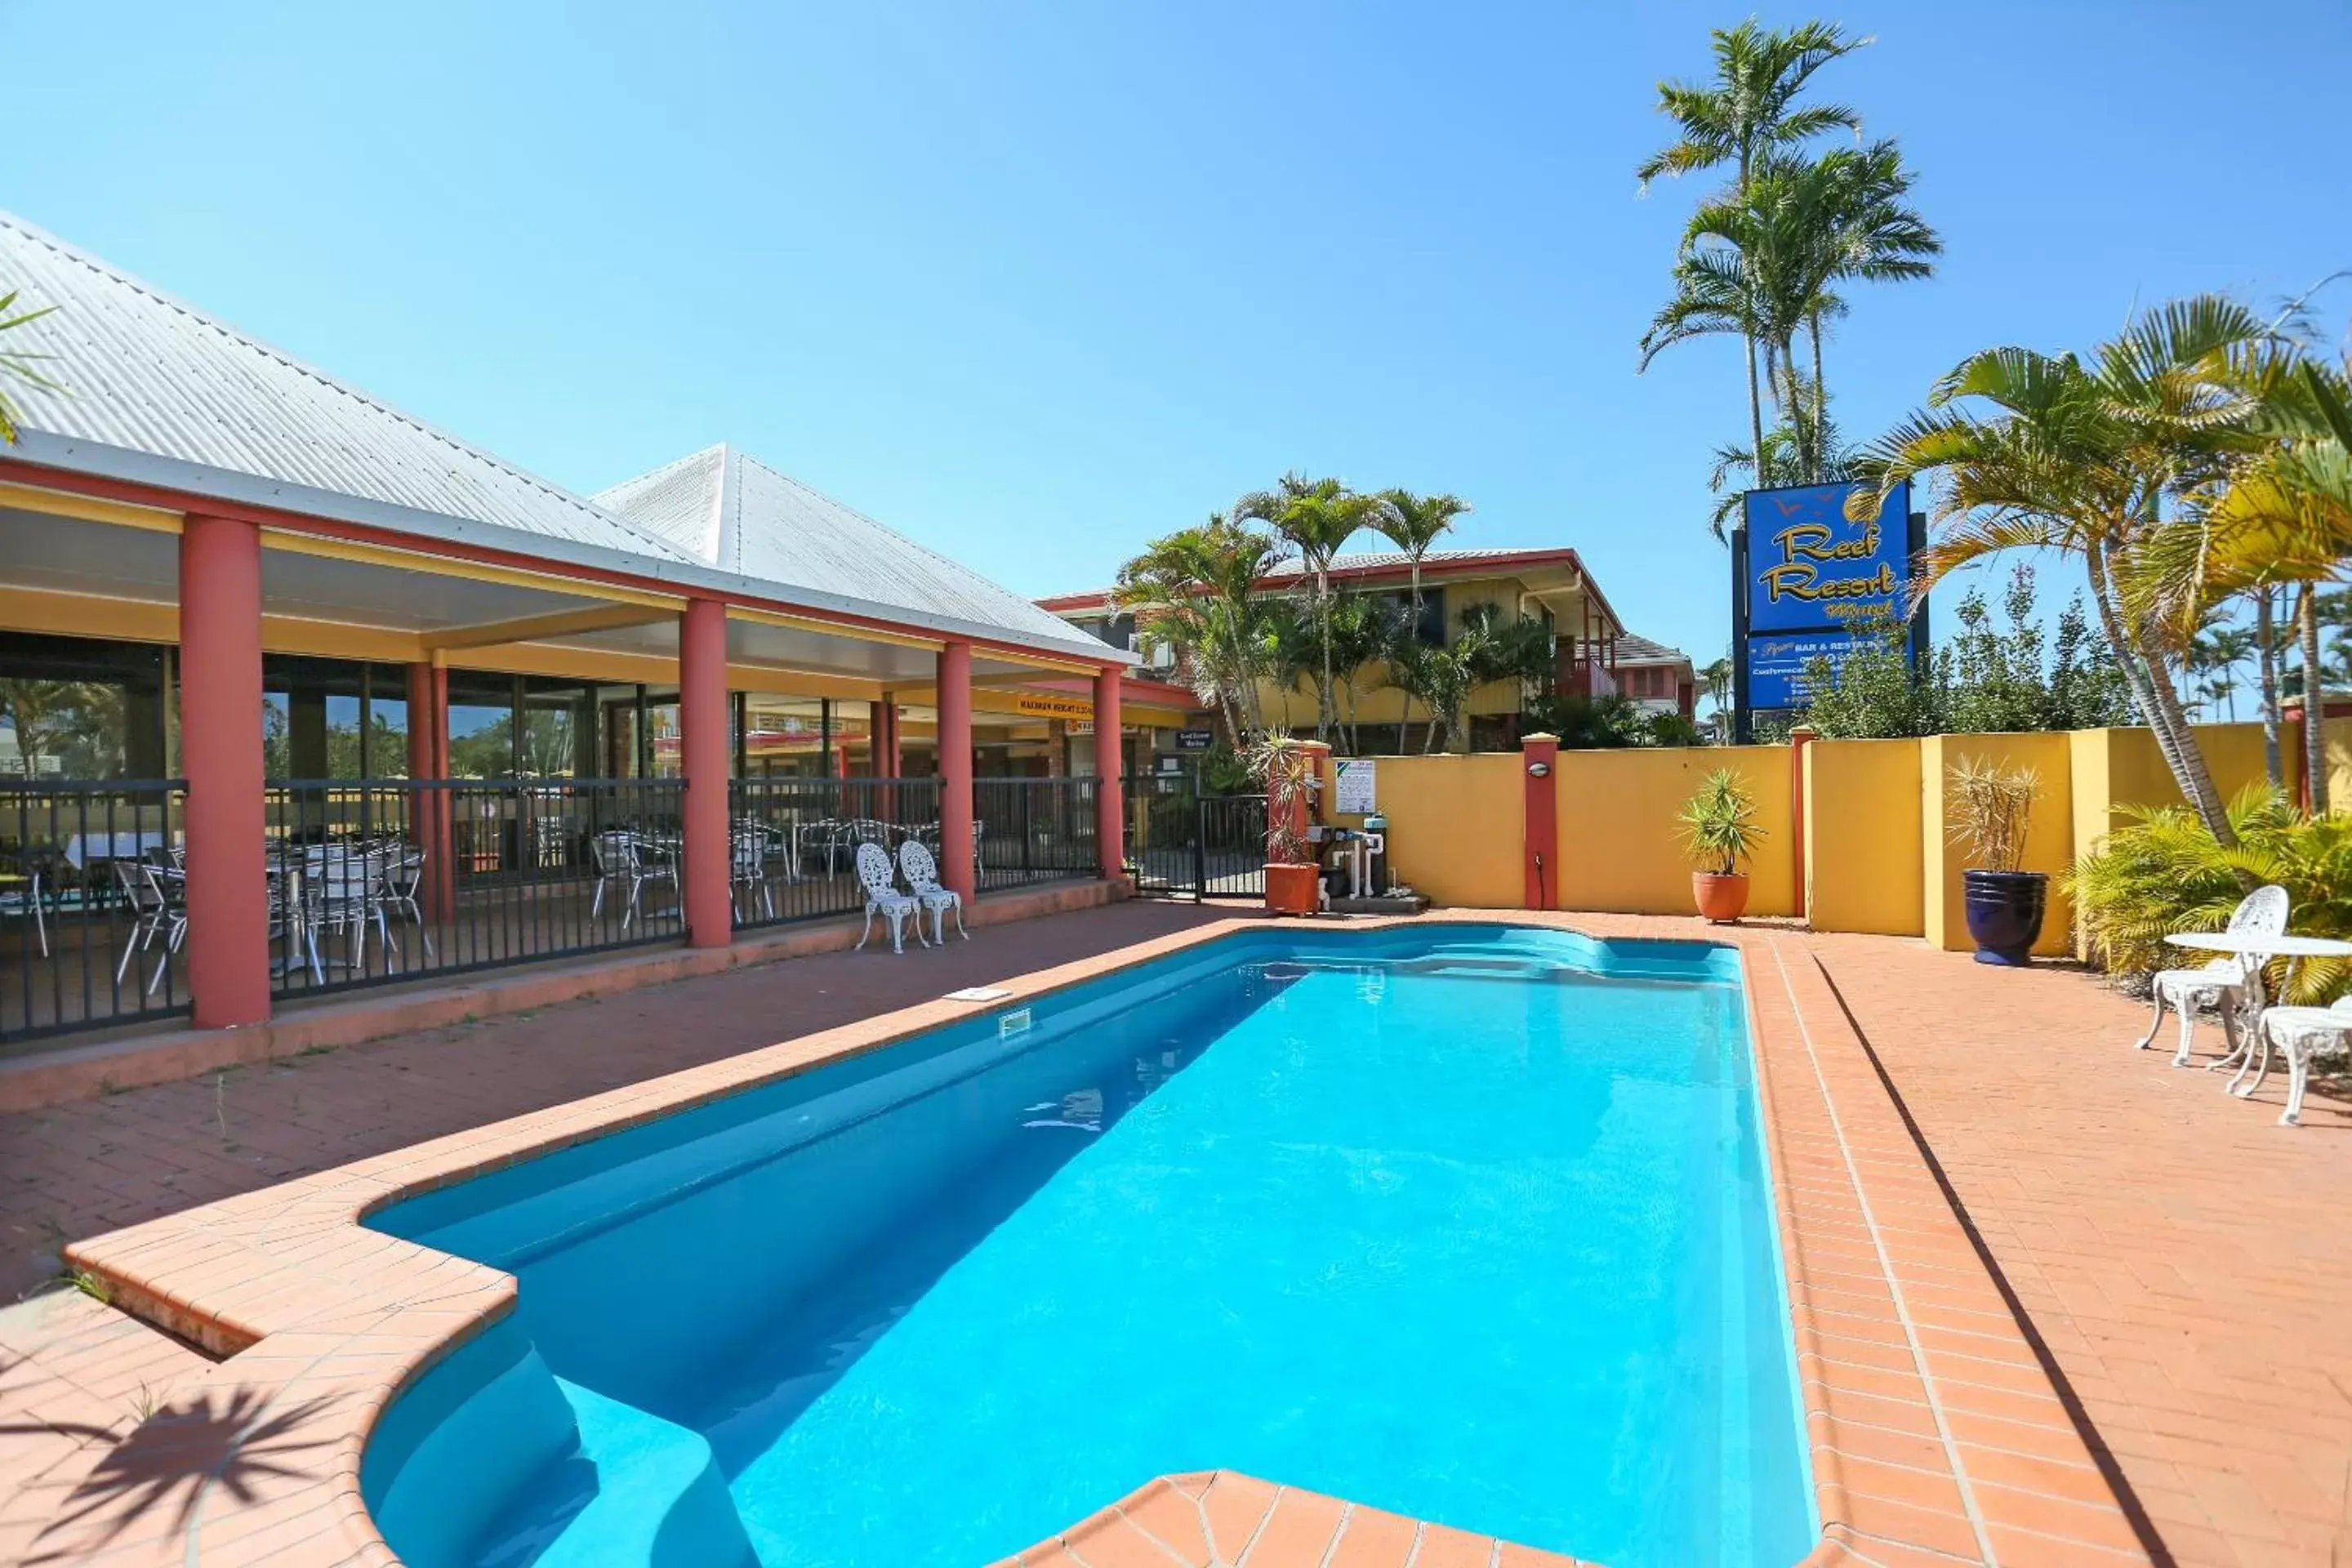 On site, Swimming Pool in Reef Resort Motel